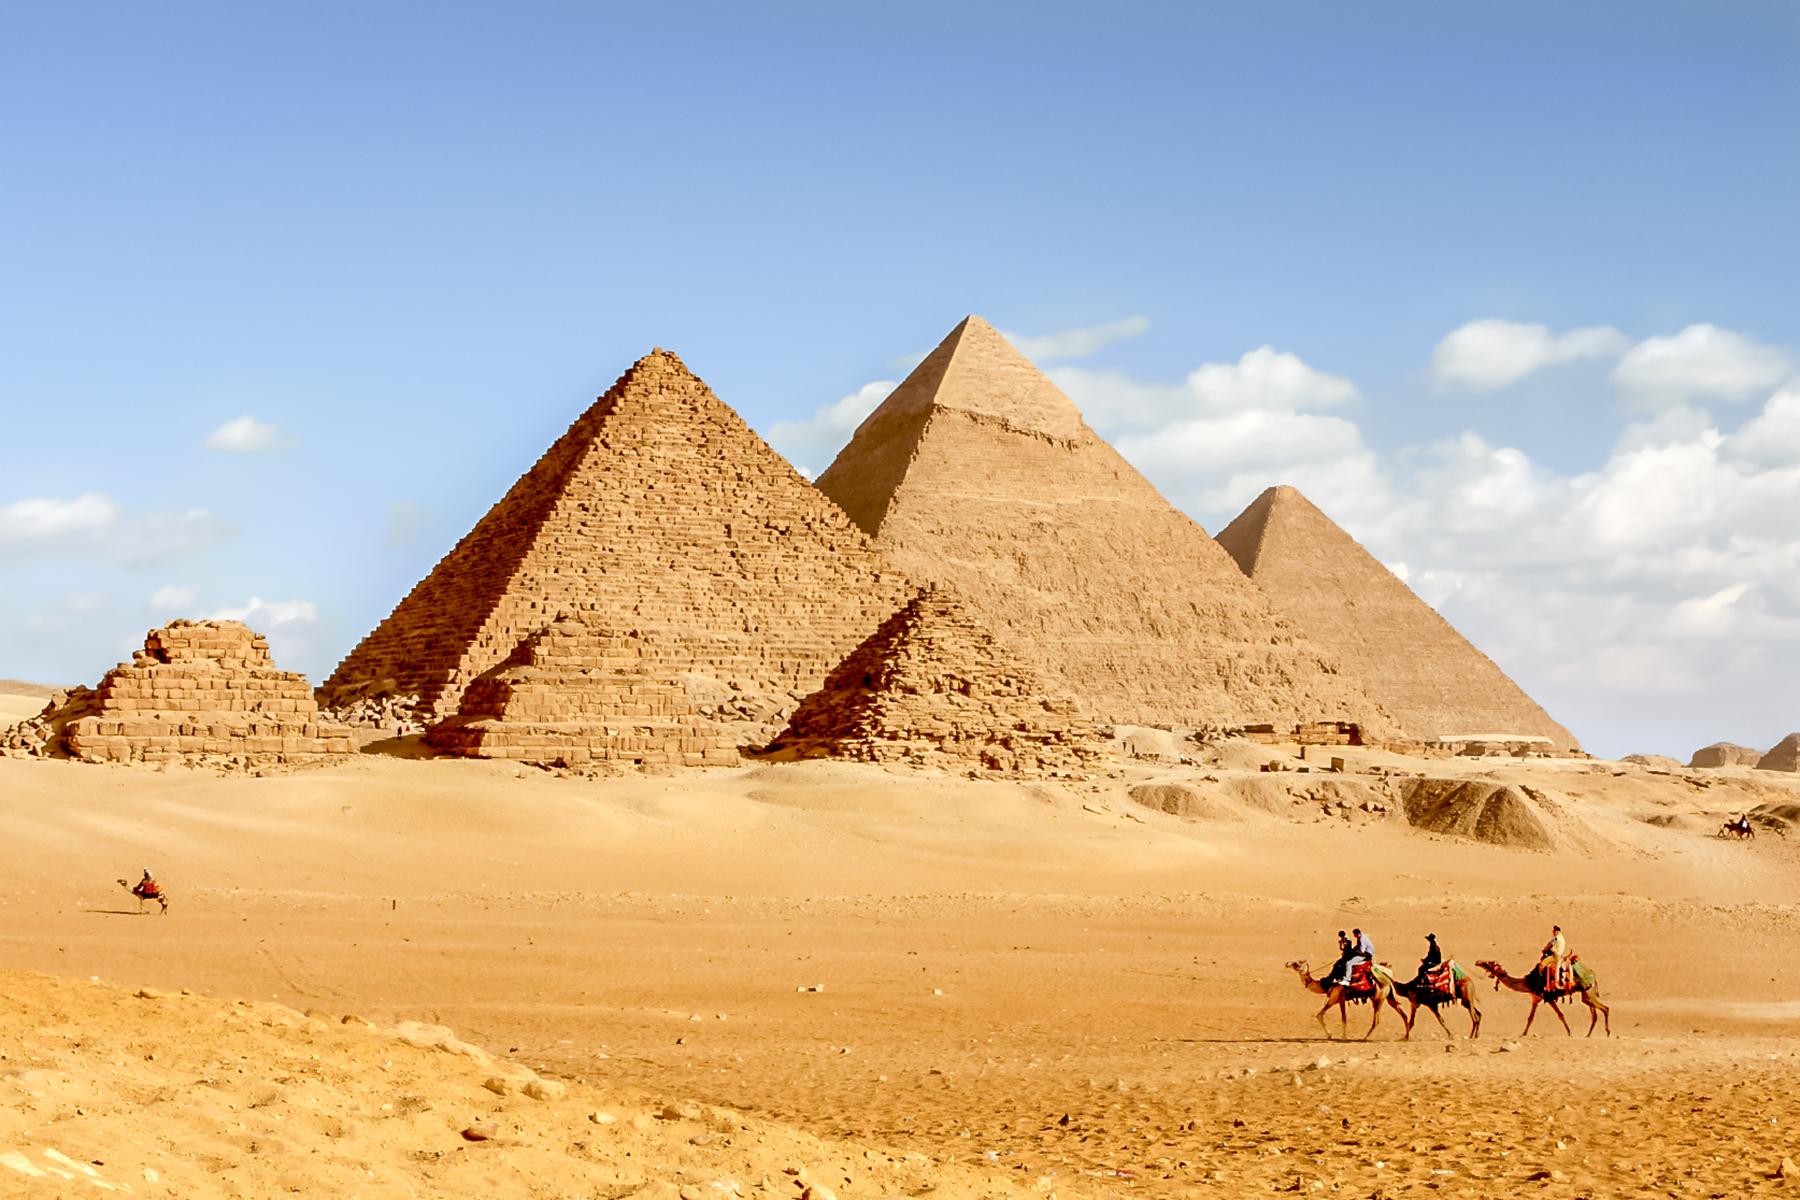 Image result for egypt